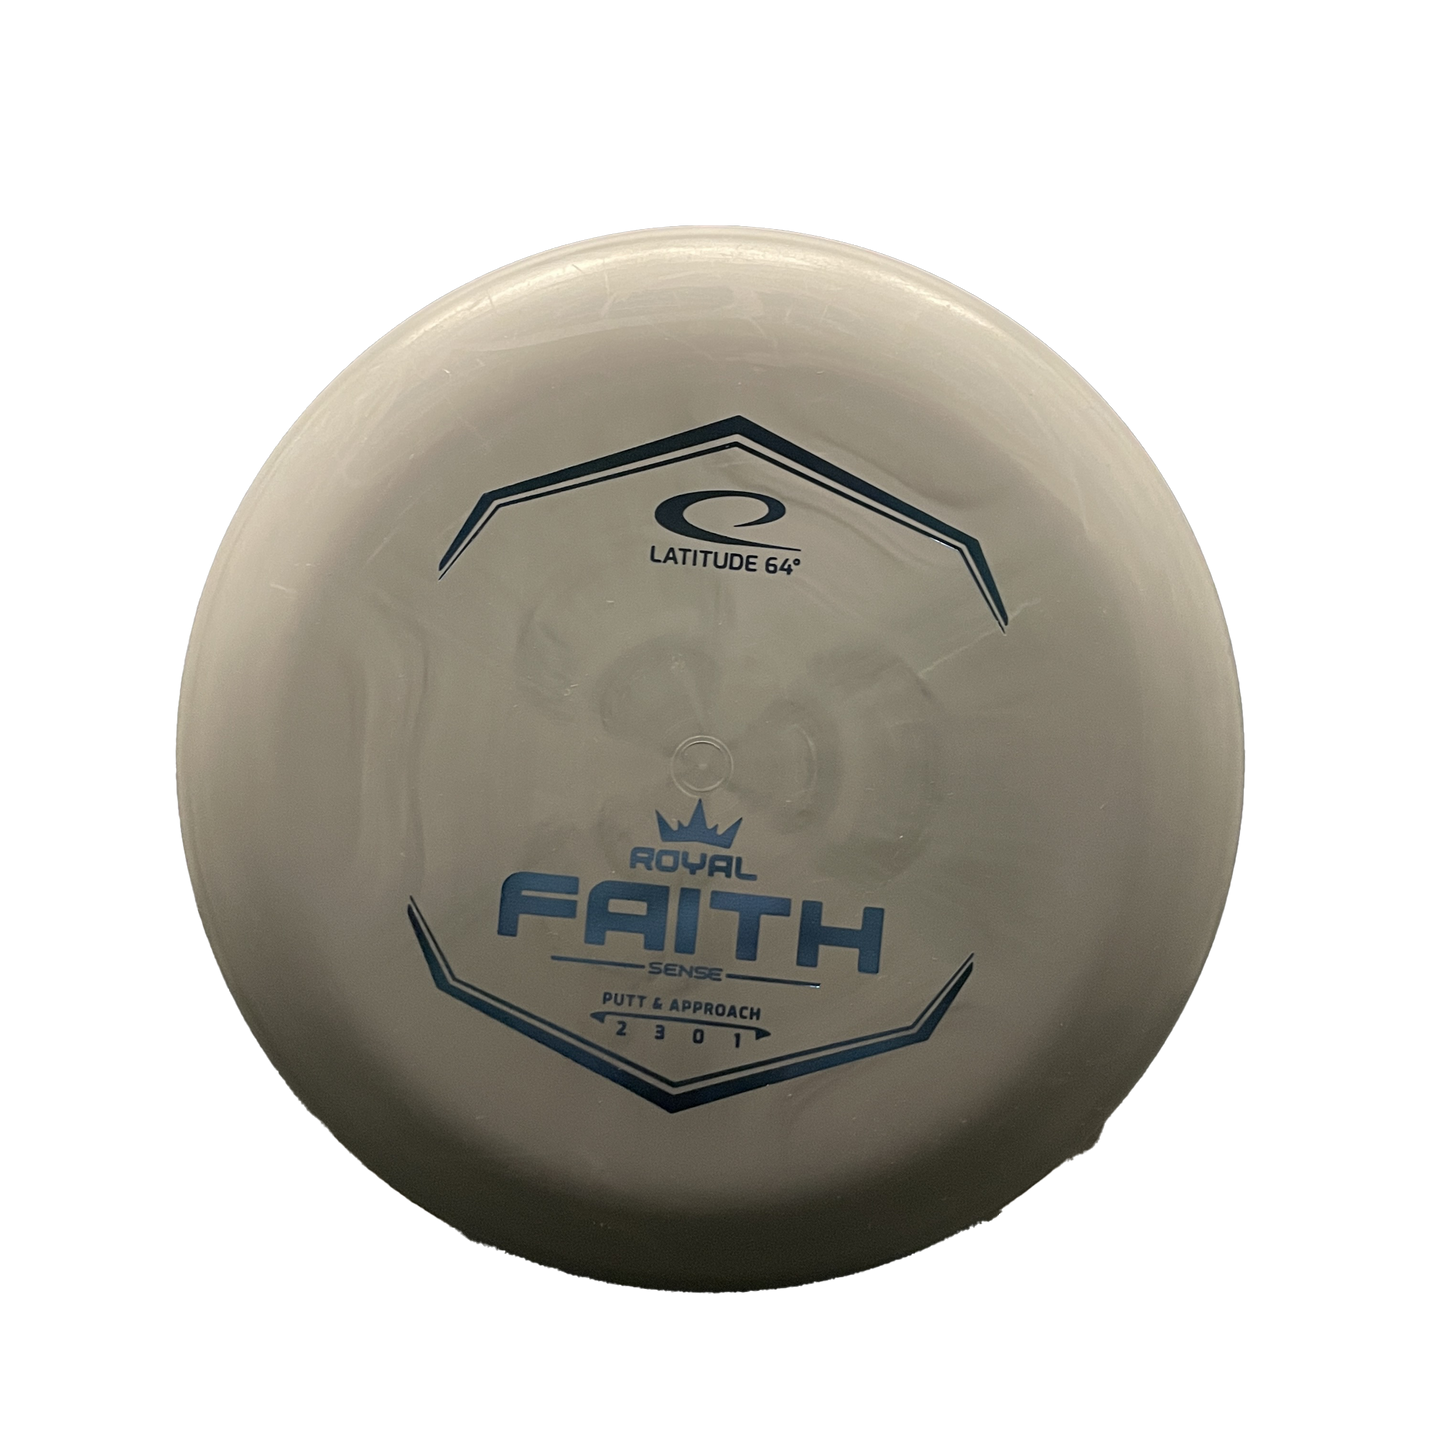 Latitude 64 Royal Faith - Putter